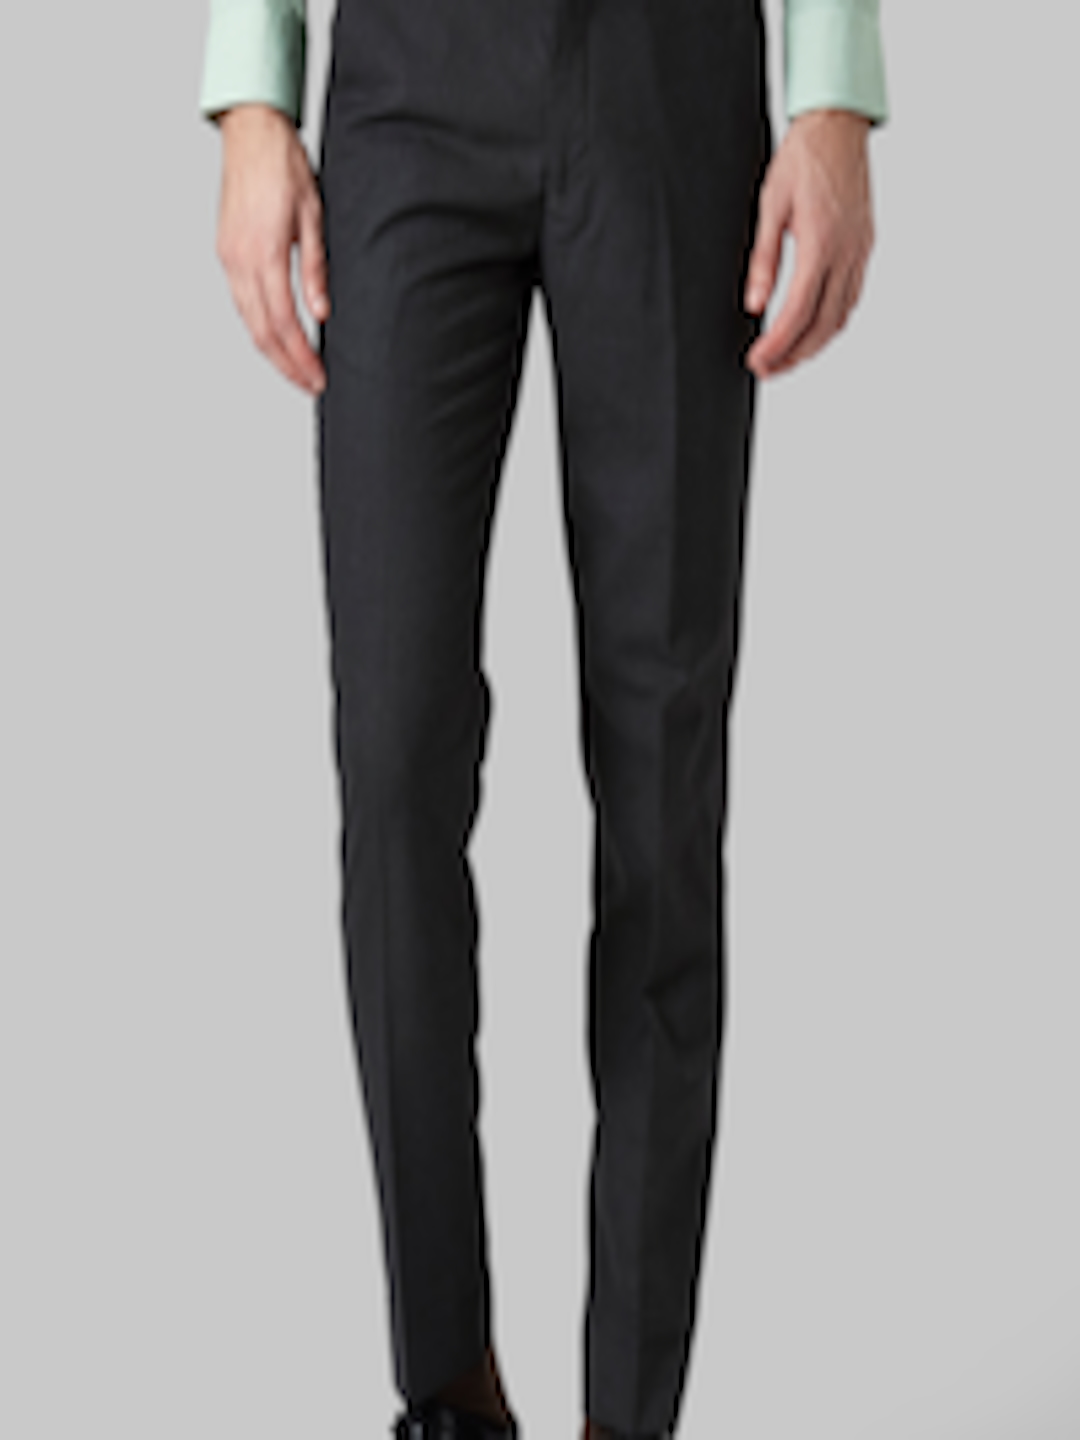 Buy Park Avenue Men Grey Regular Fit Solid Formal Trousers - Trousers ...